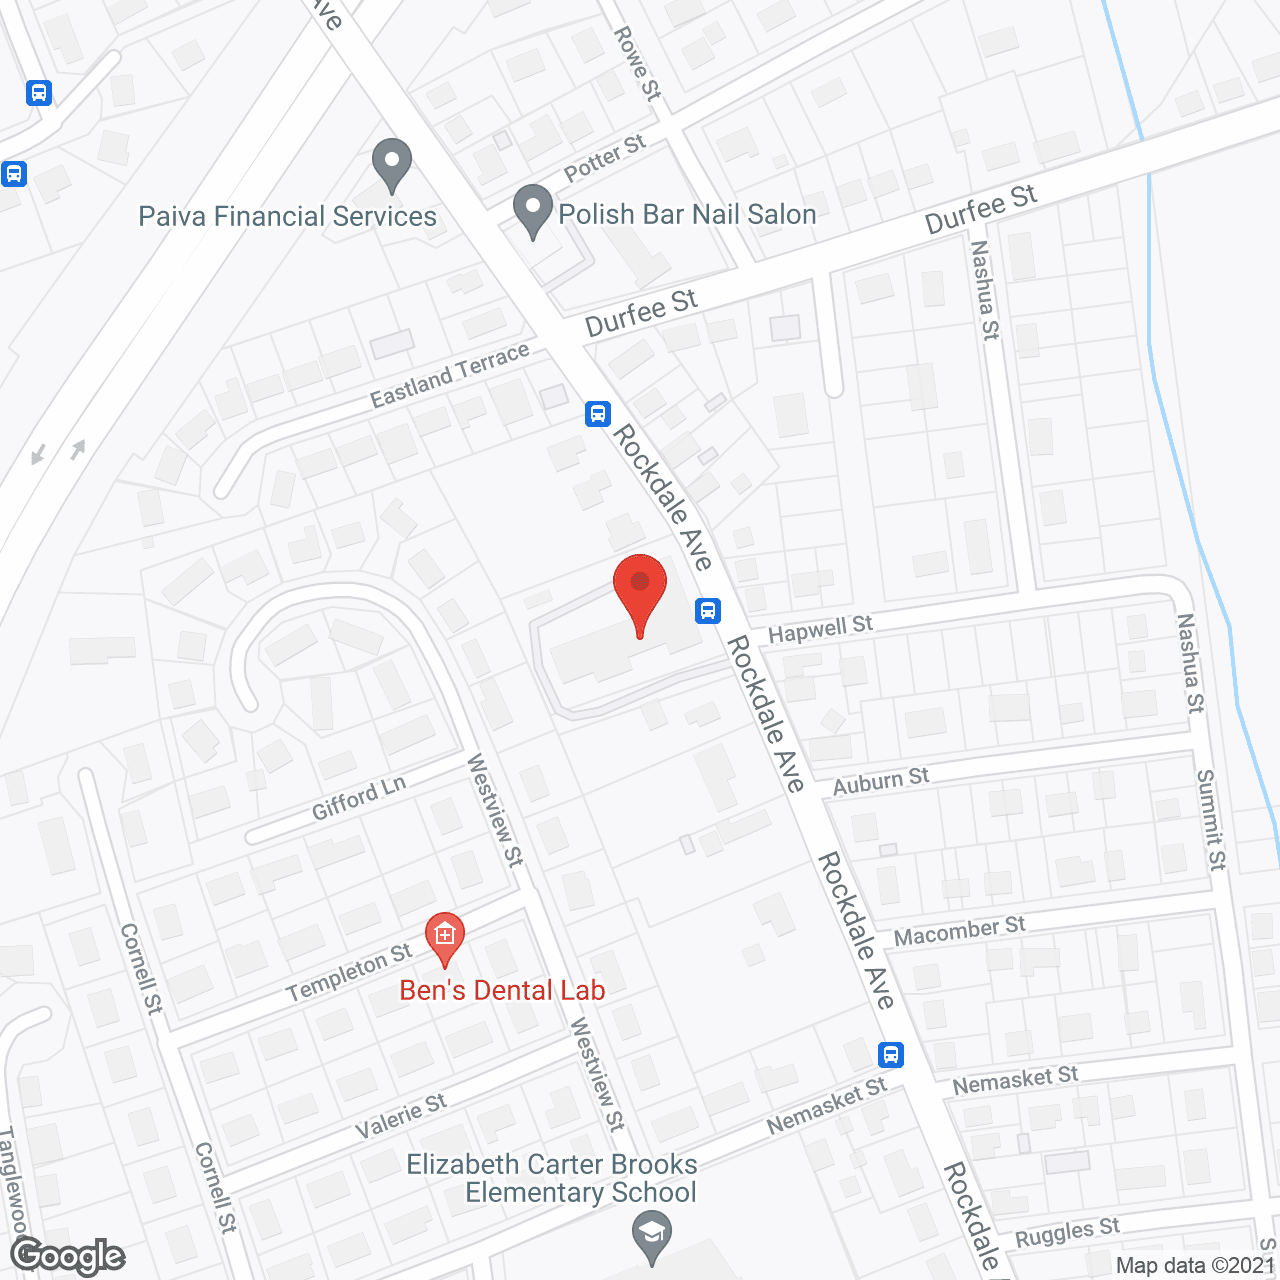 Hallmark Nursing and Rehabilitation Center in google map